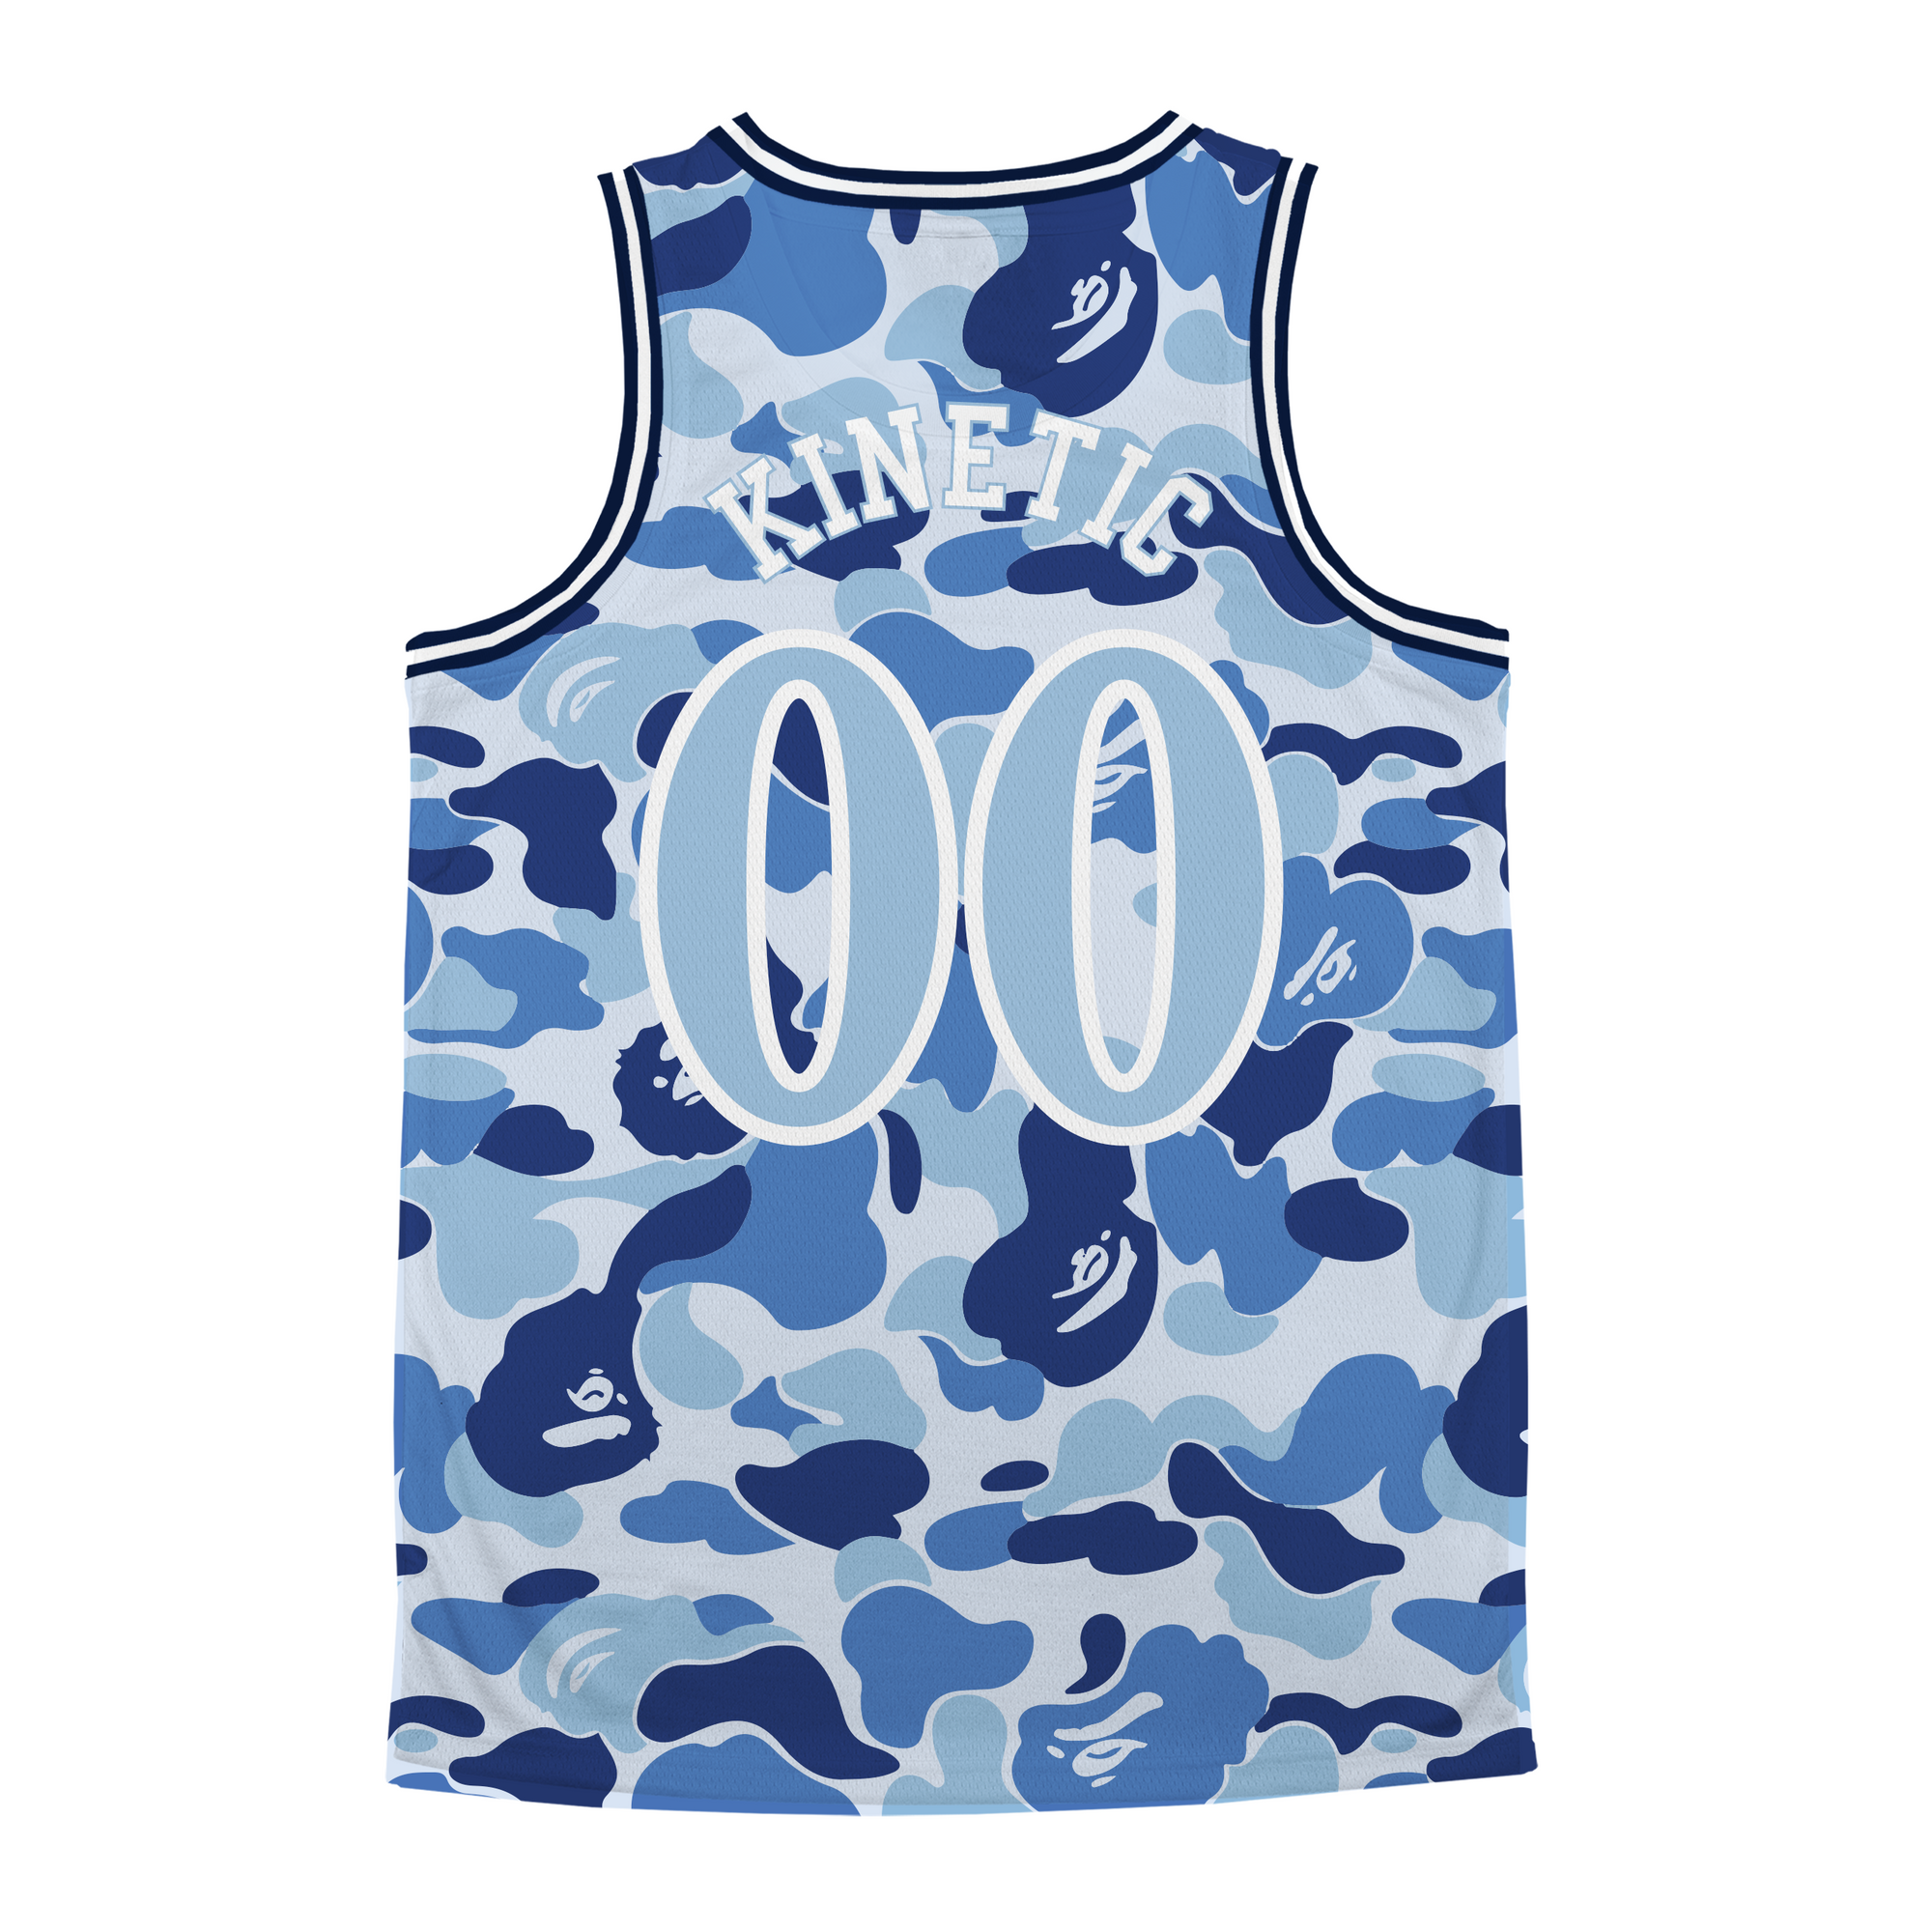 Alpha Tau Omega - Blue Camo Basketball Jersey